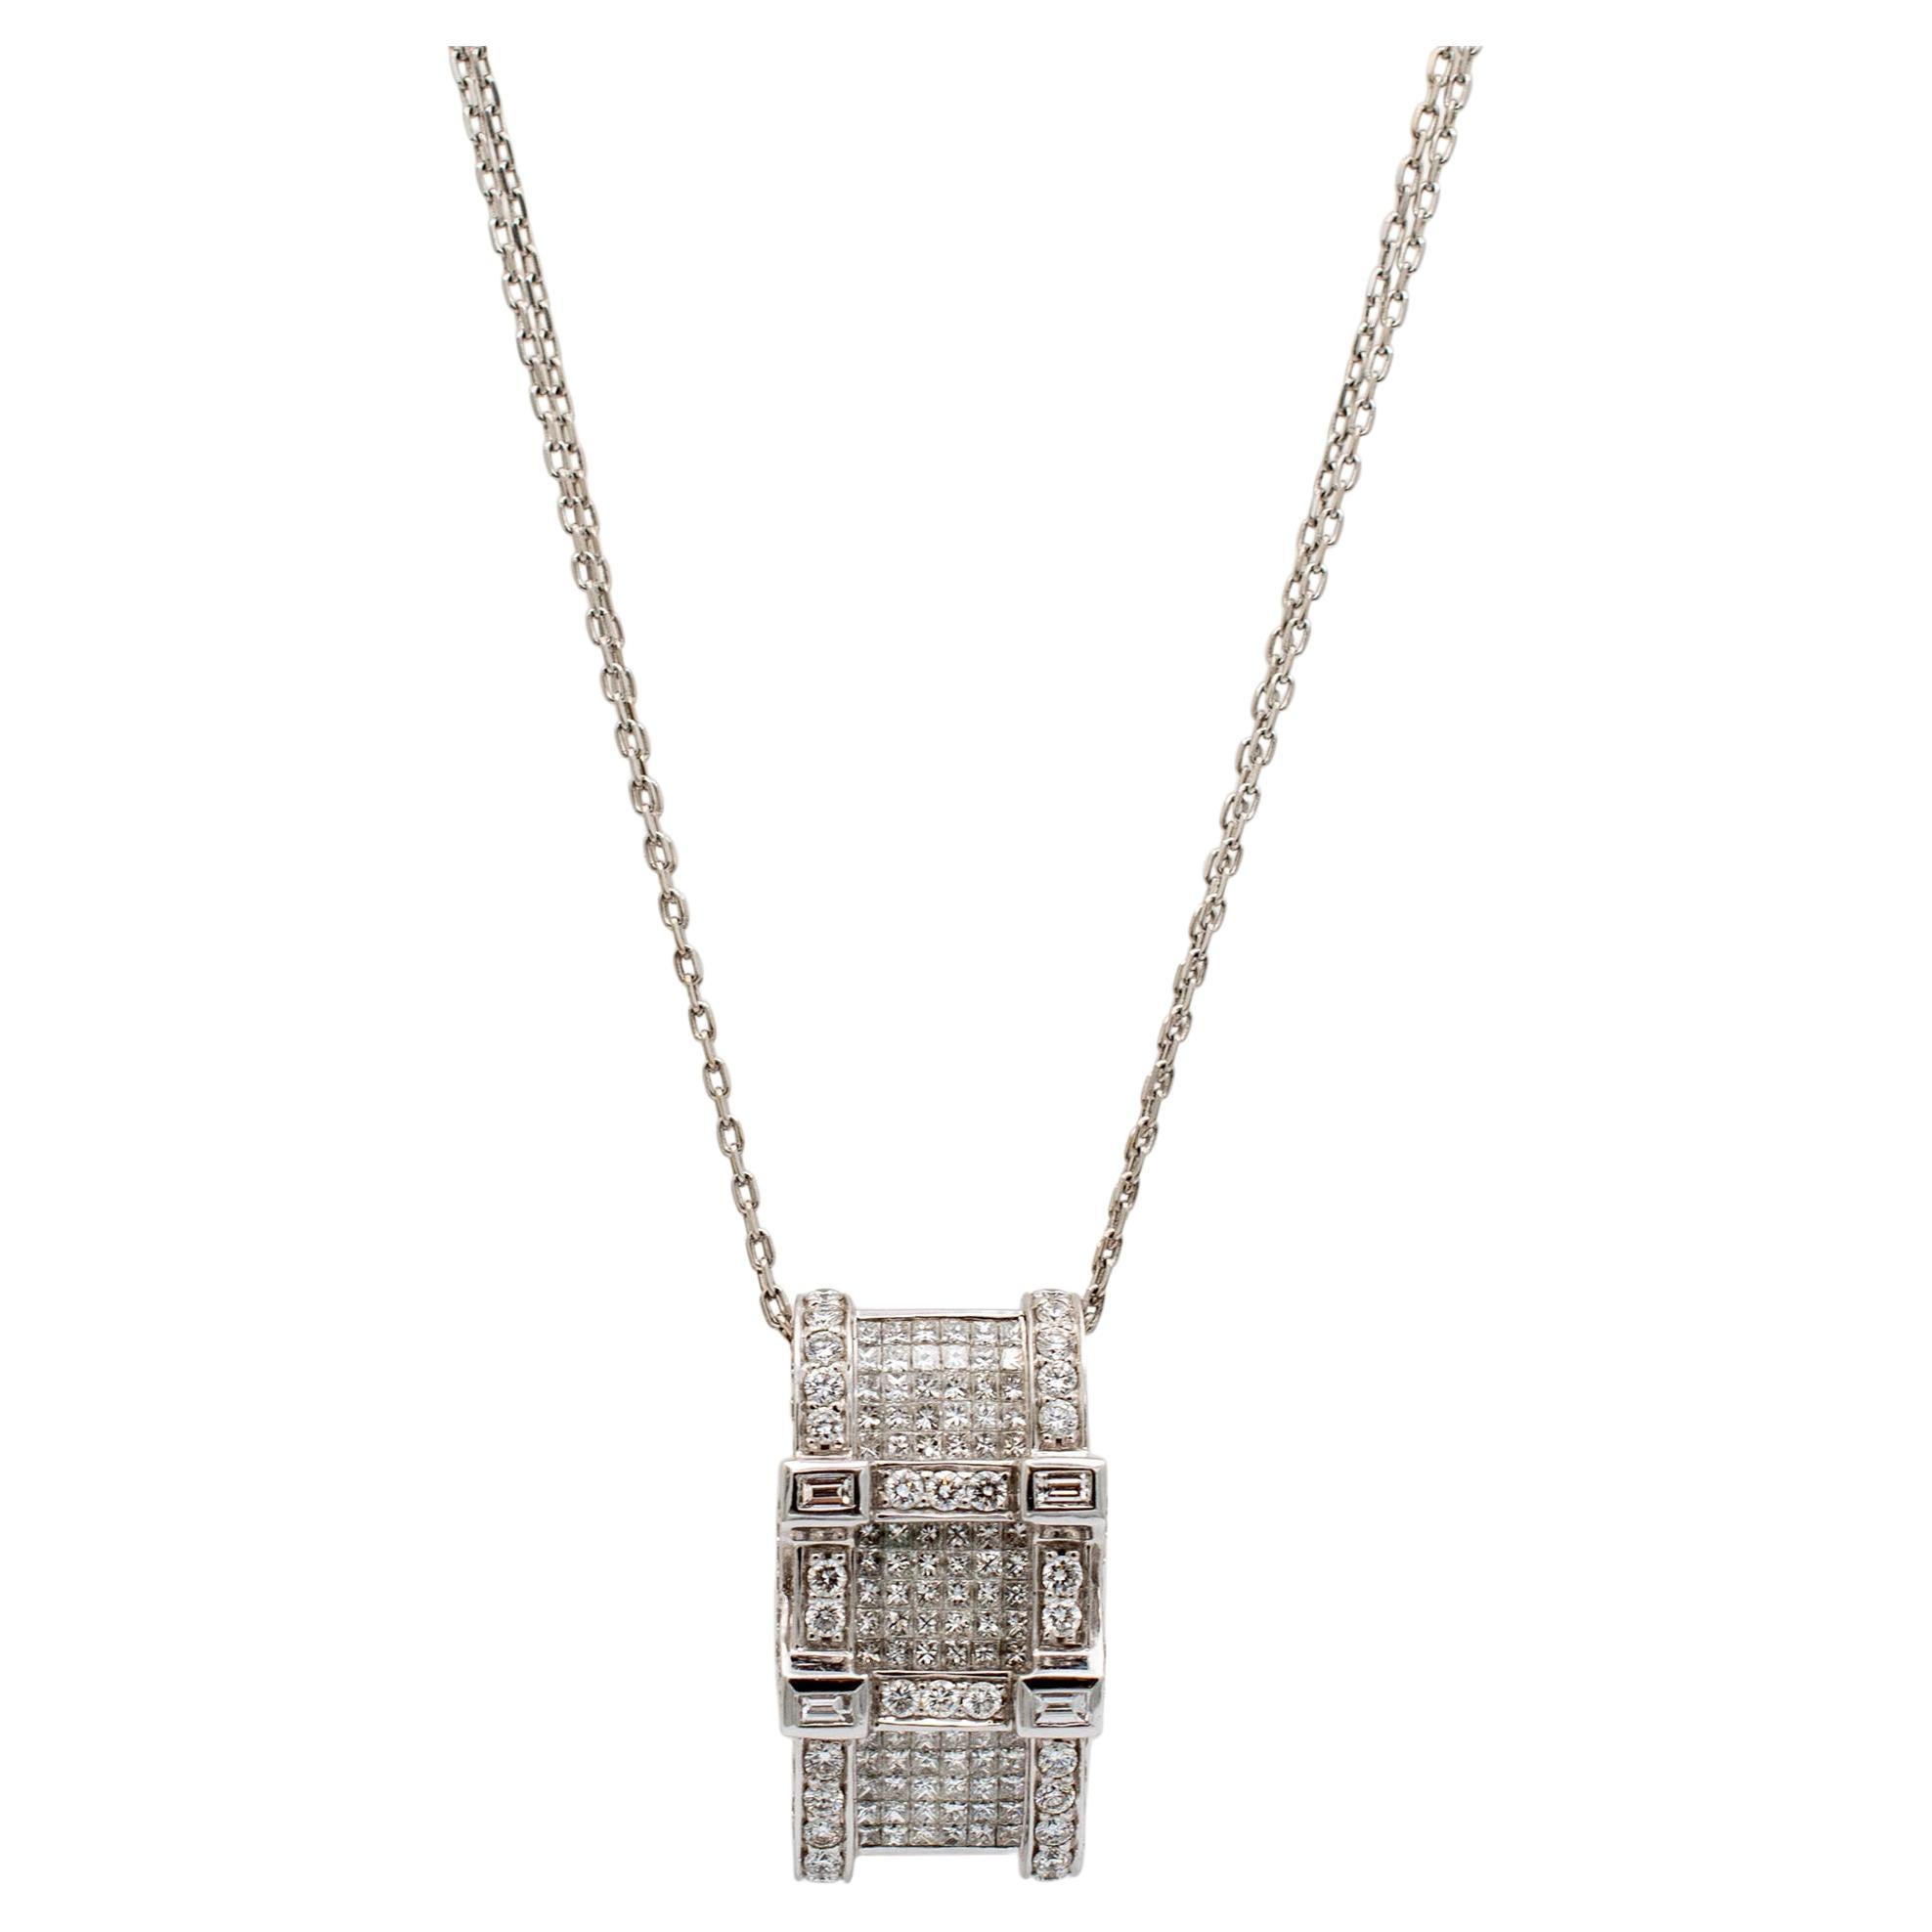 Ladies 14K White Gold Cluster Diamond Pendant Necklace